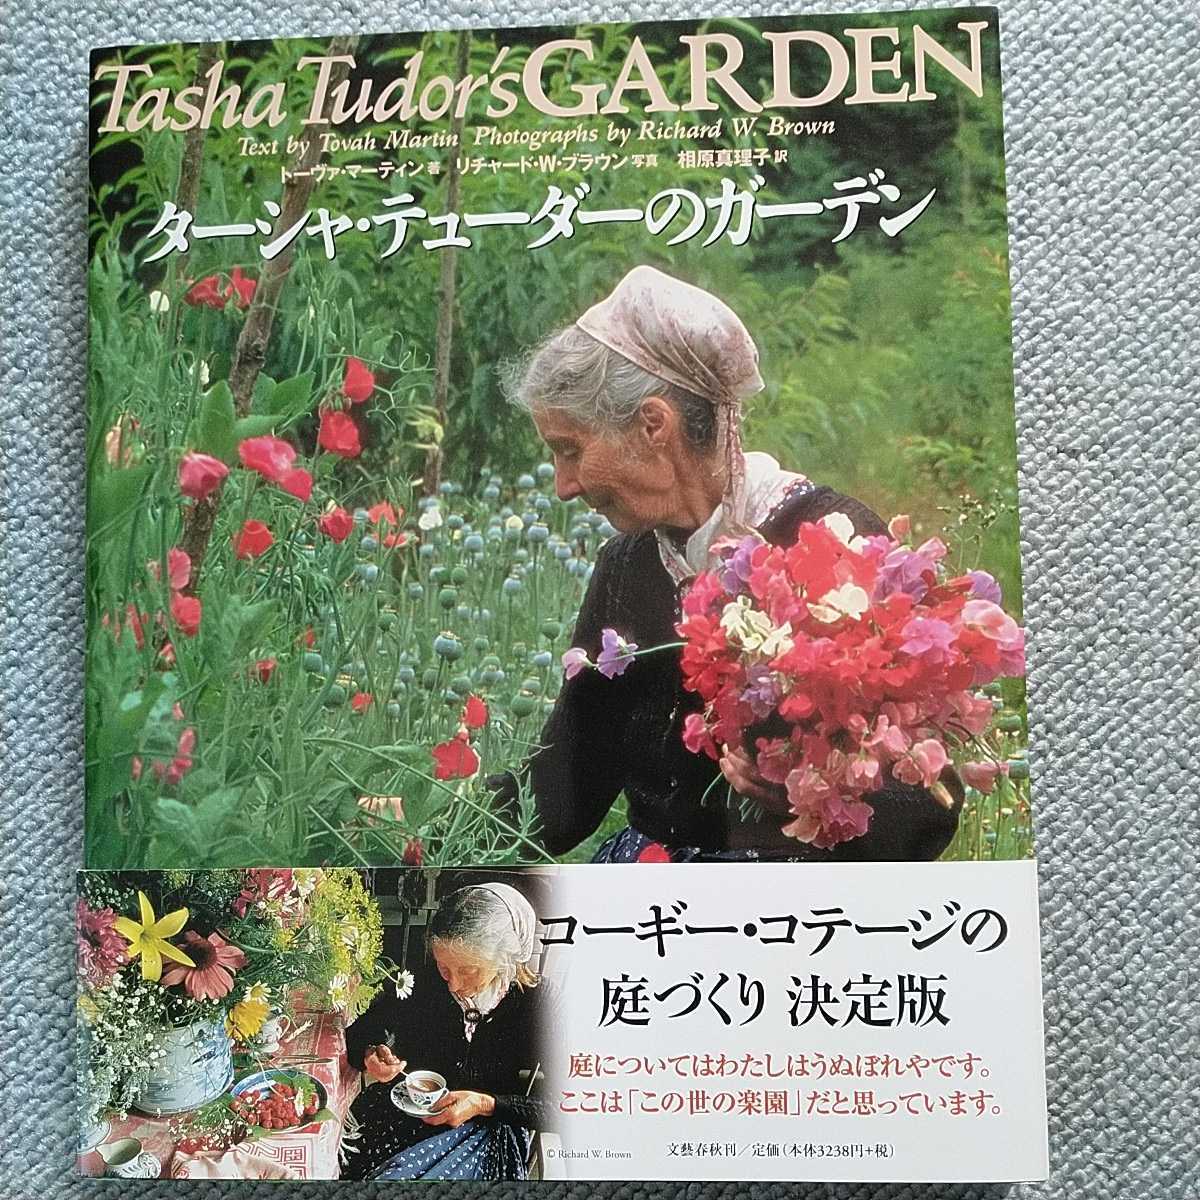 ta- car *te.-da-. garden gardening * garden ...